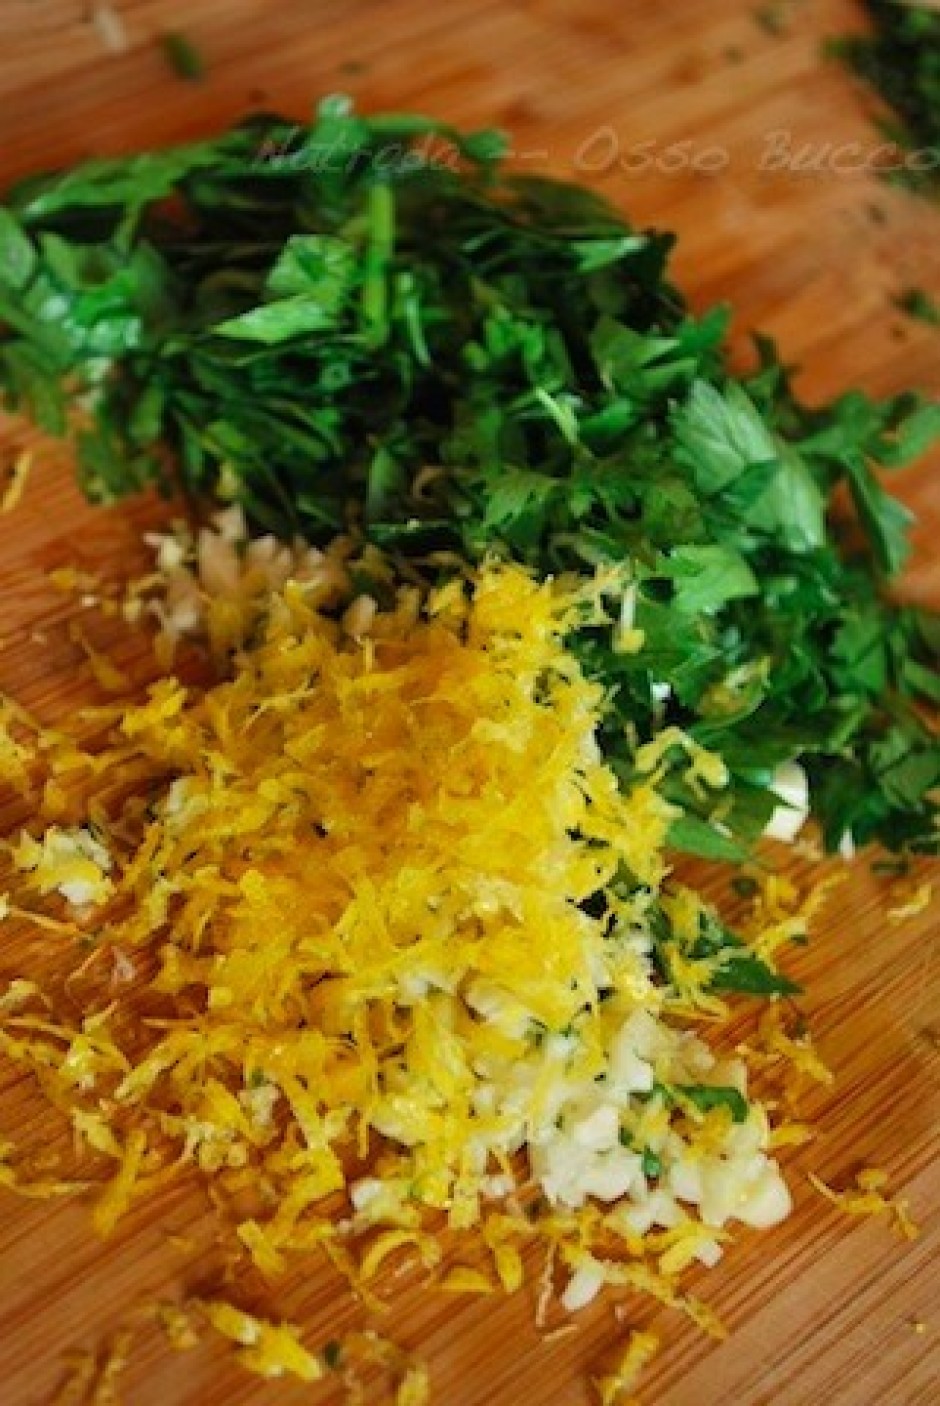 Chop garlic and parsley